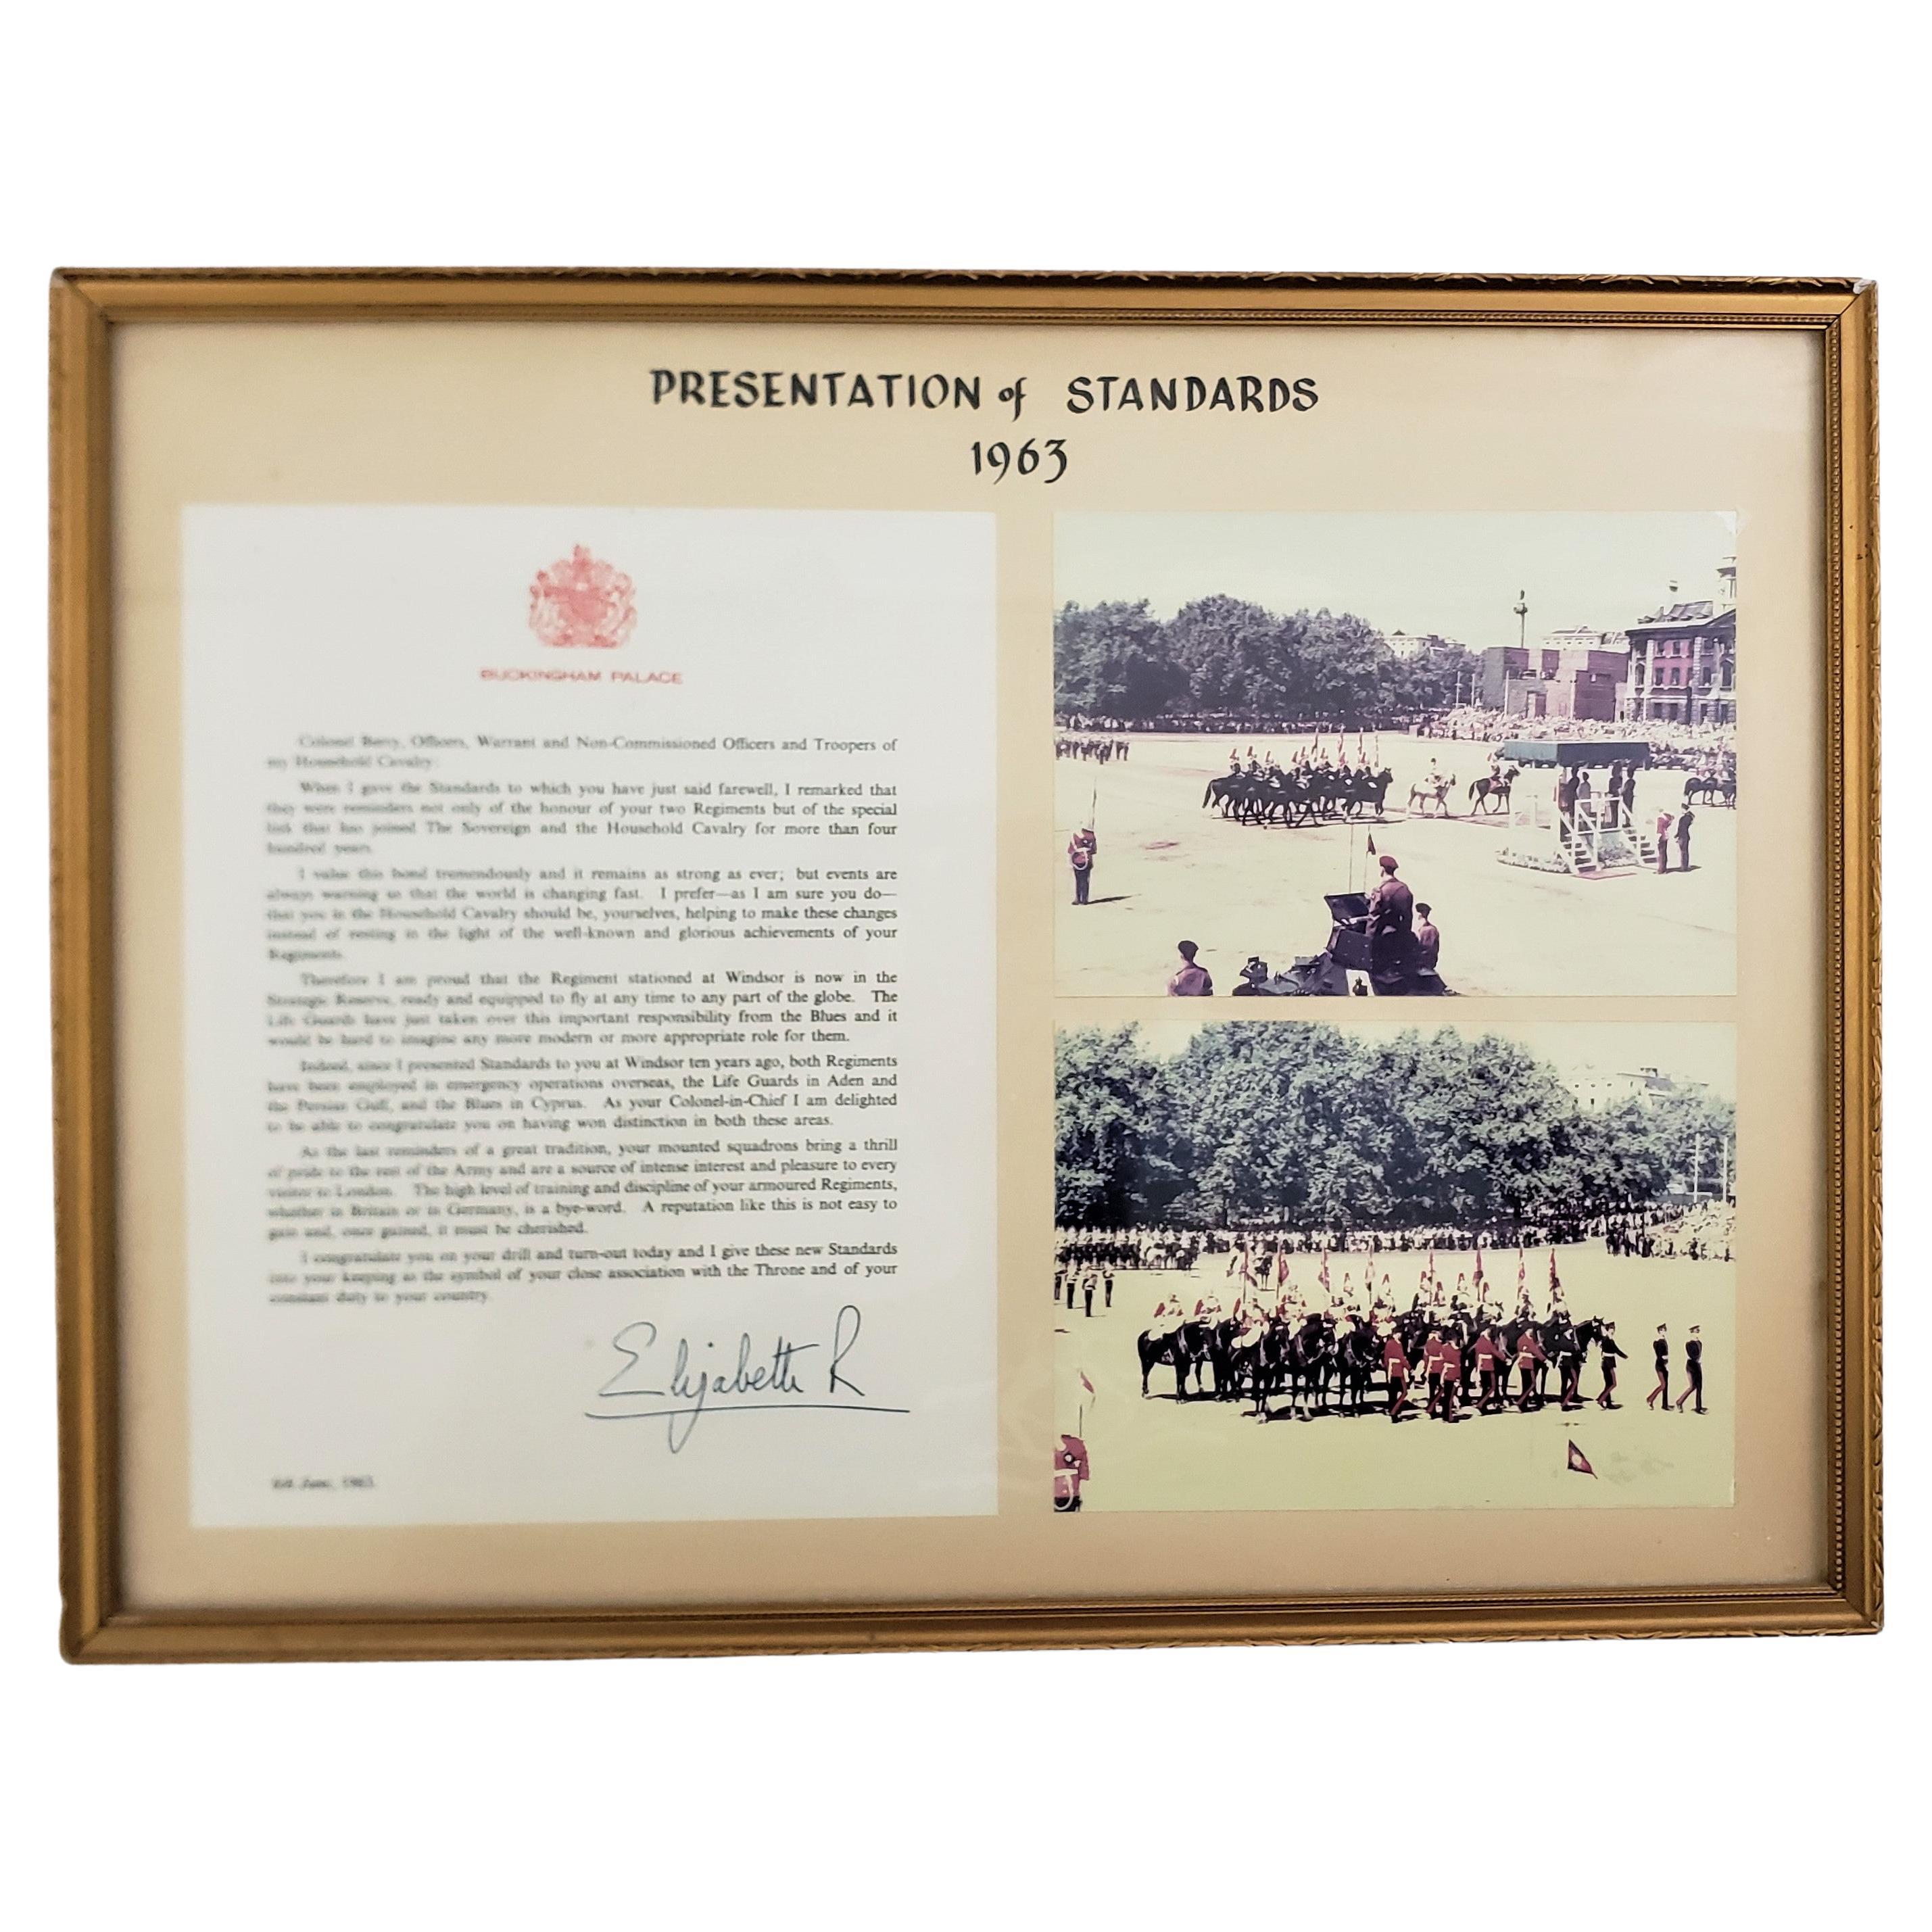 Queen Elizabeth II Signed Letter for the Presentation of Standards 1963 & Photos